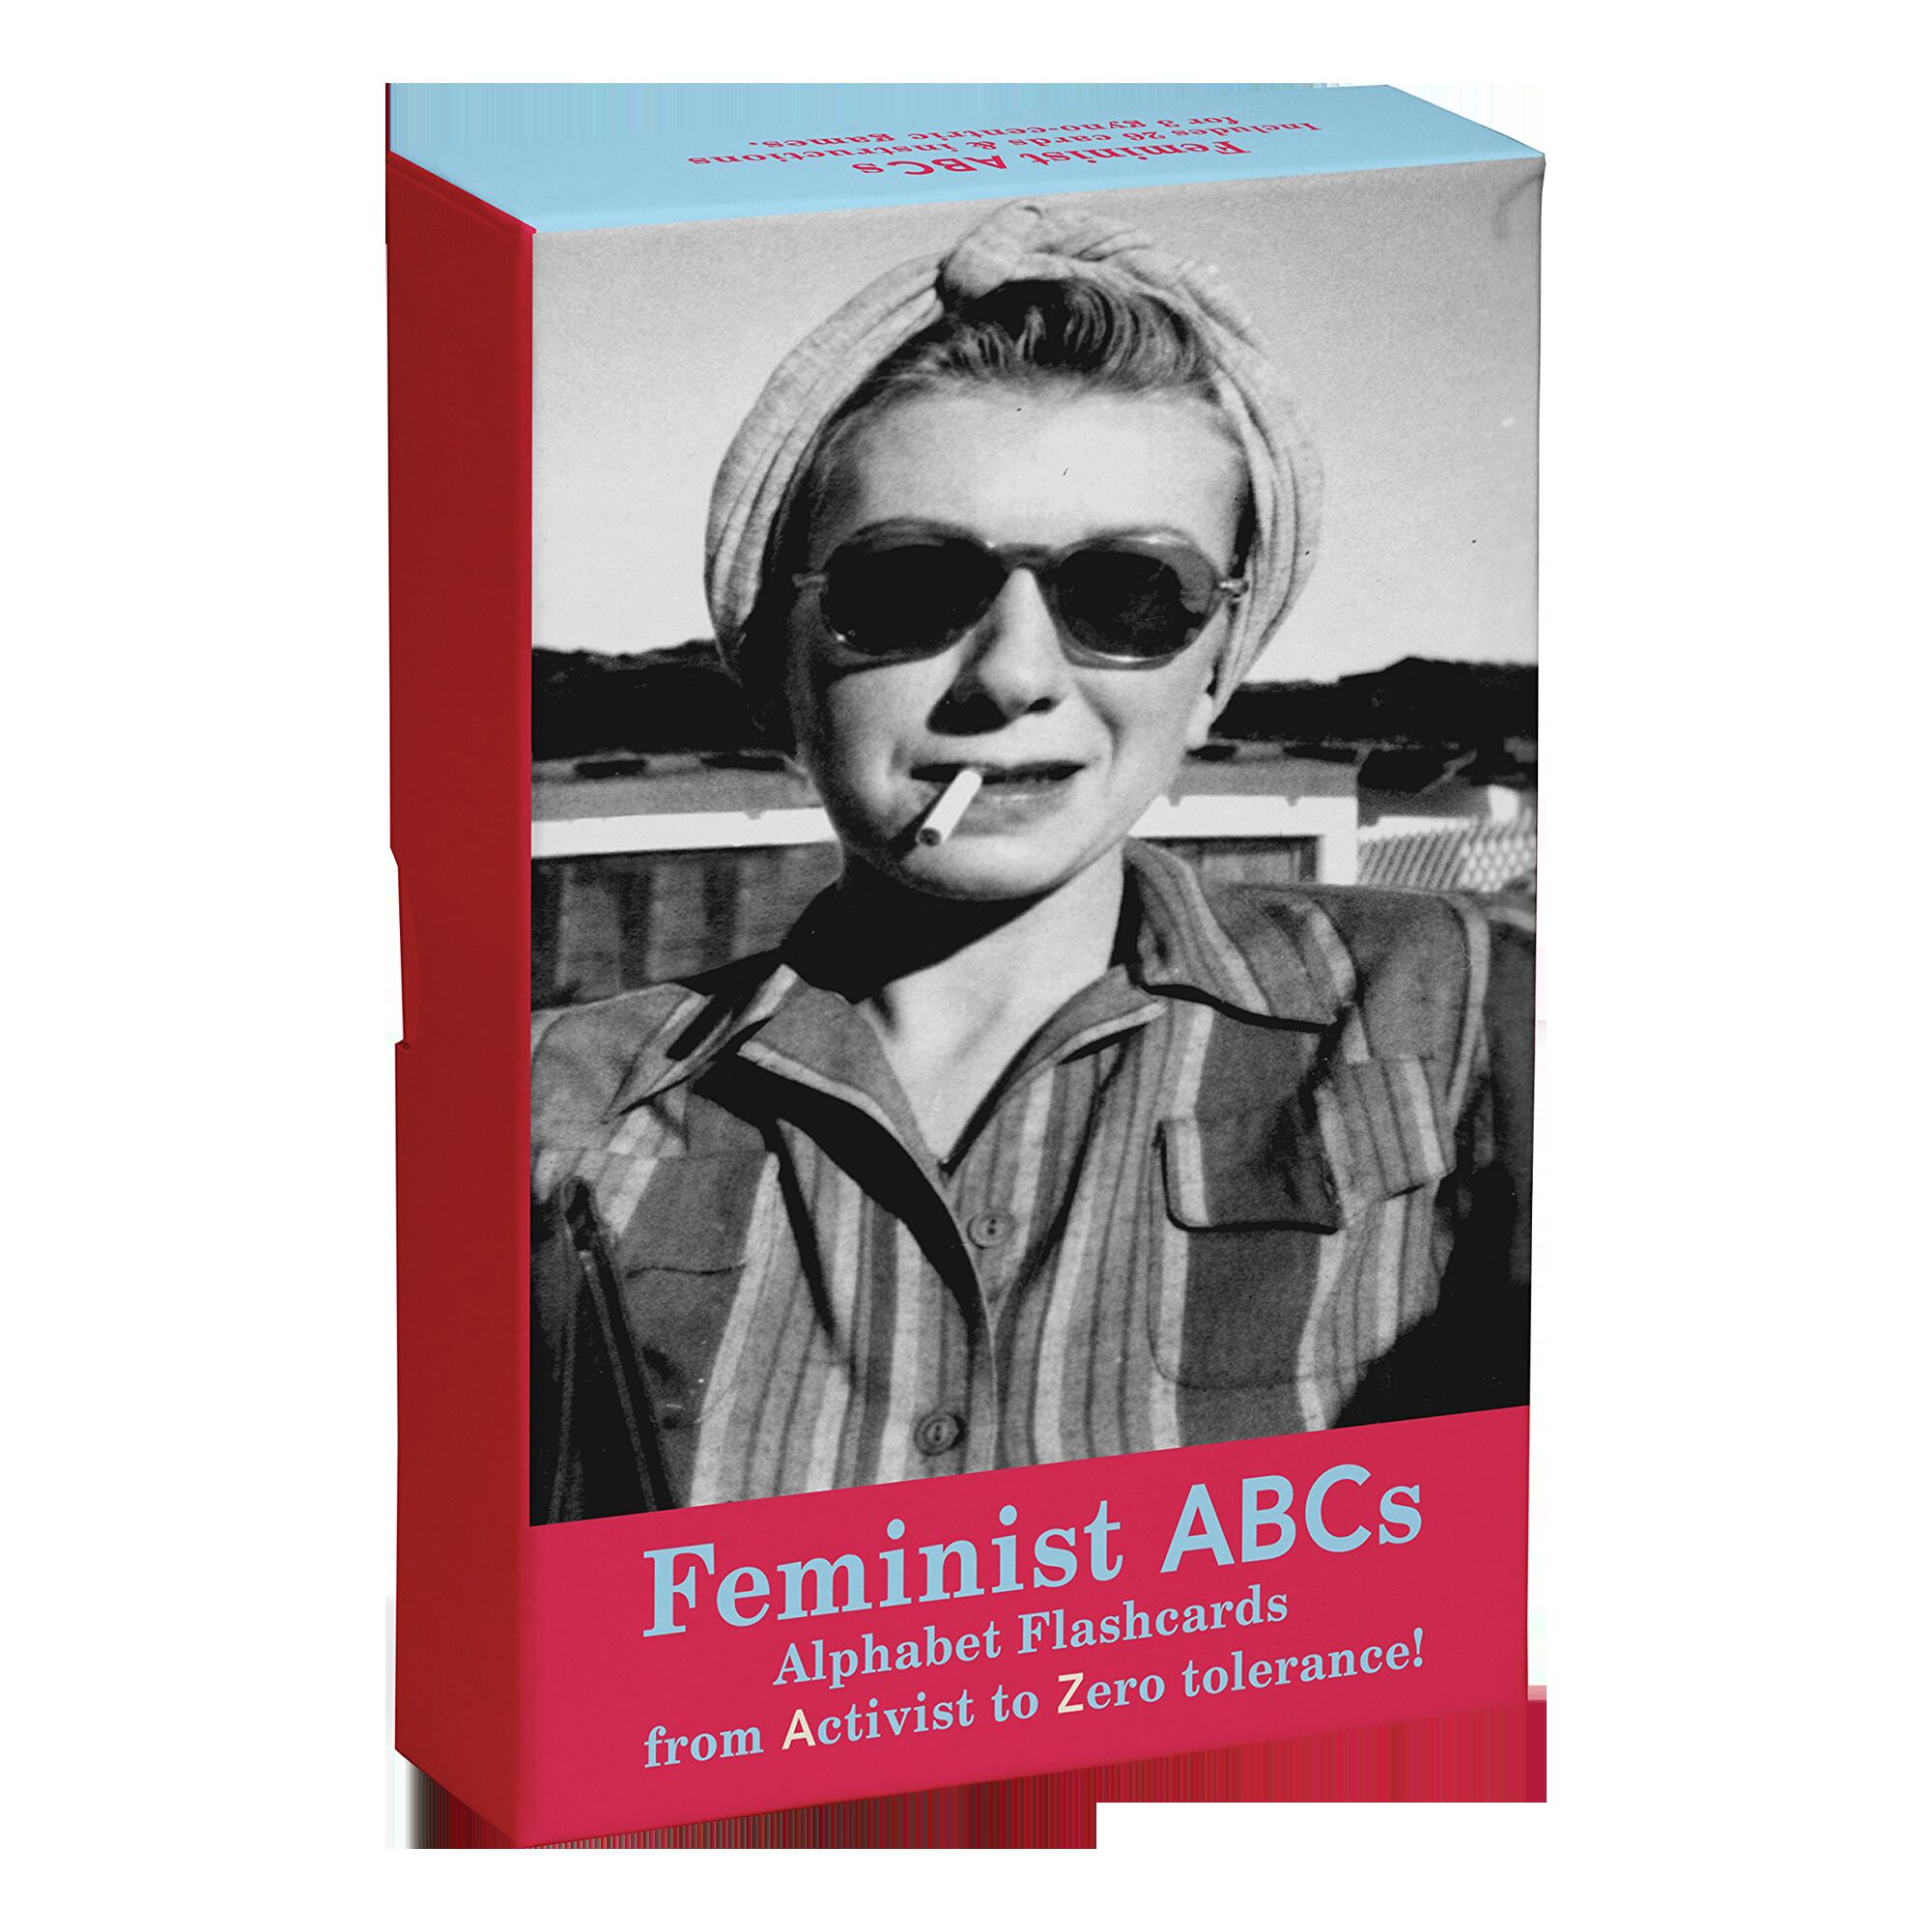 Feminist ABCs Alphabet Flashcards: From Activist to Zero Tolerance!